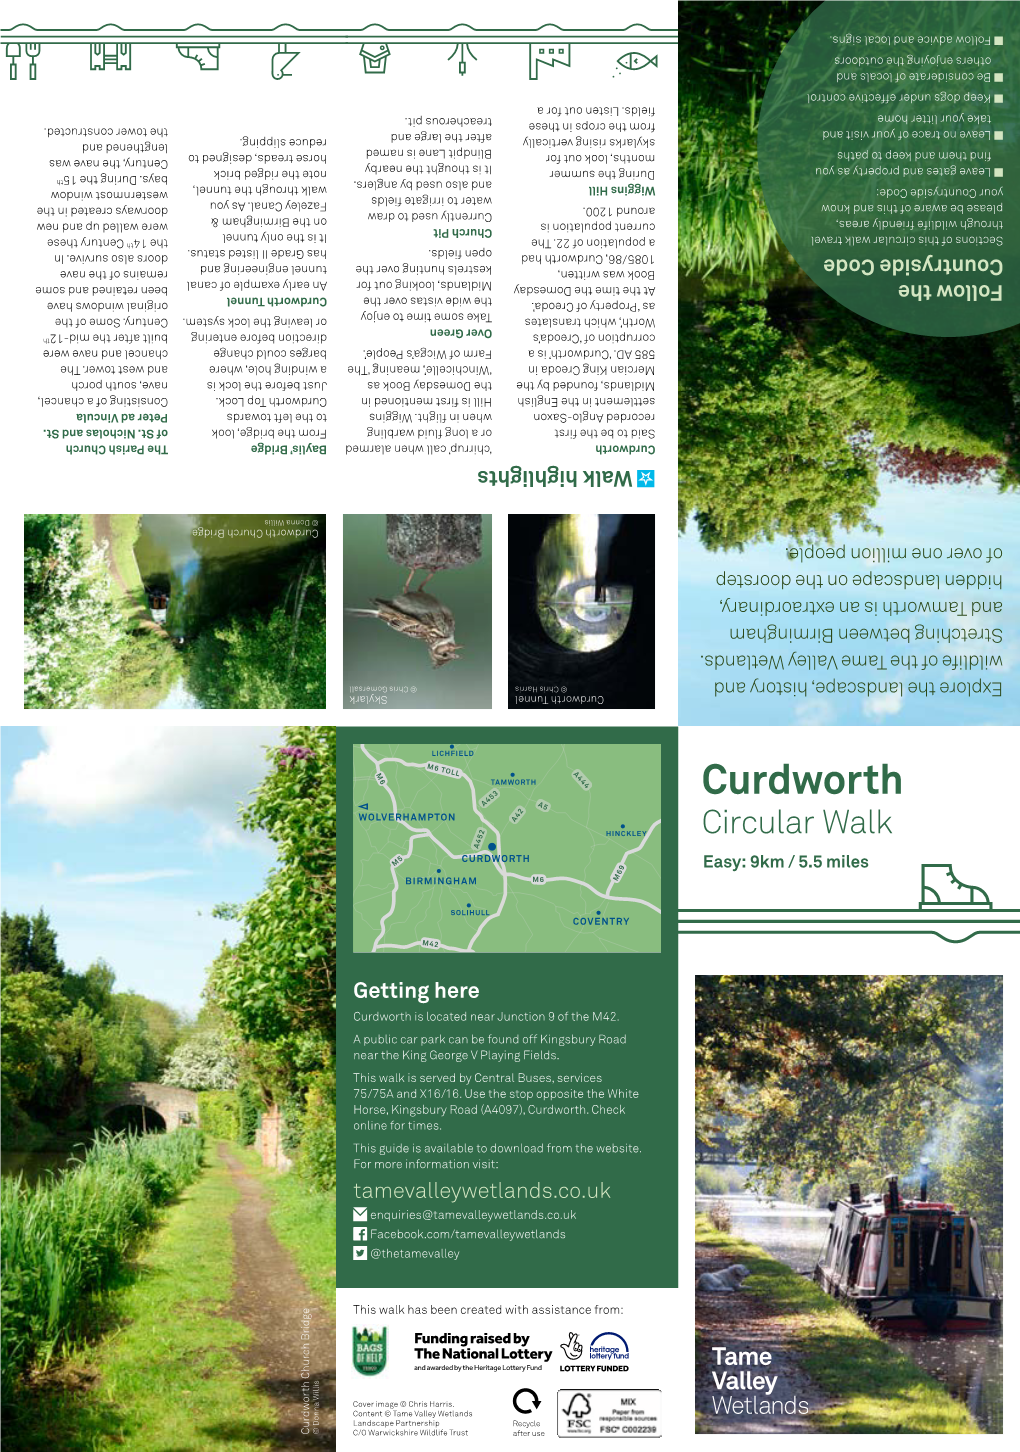 Curdworth Had Had Curdworth 1085/86, Countryside Code Countryside